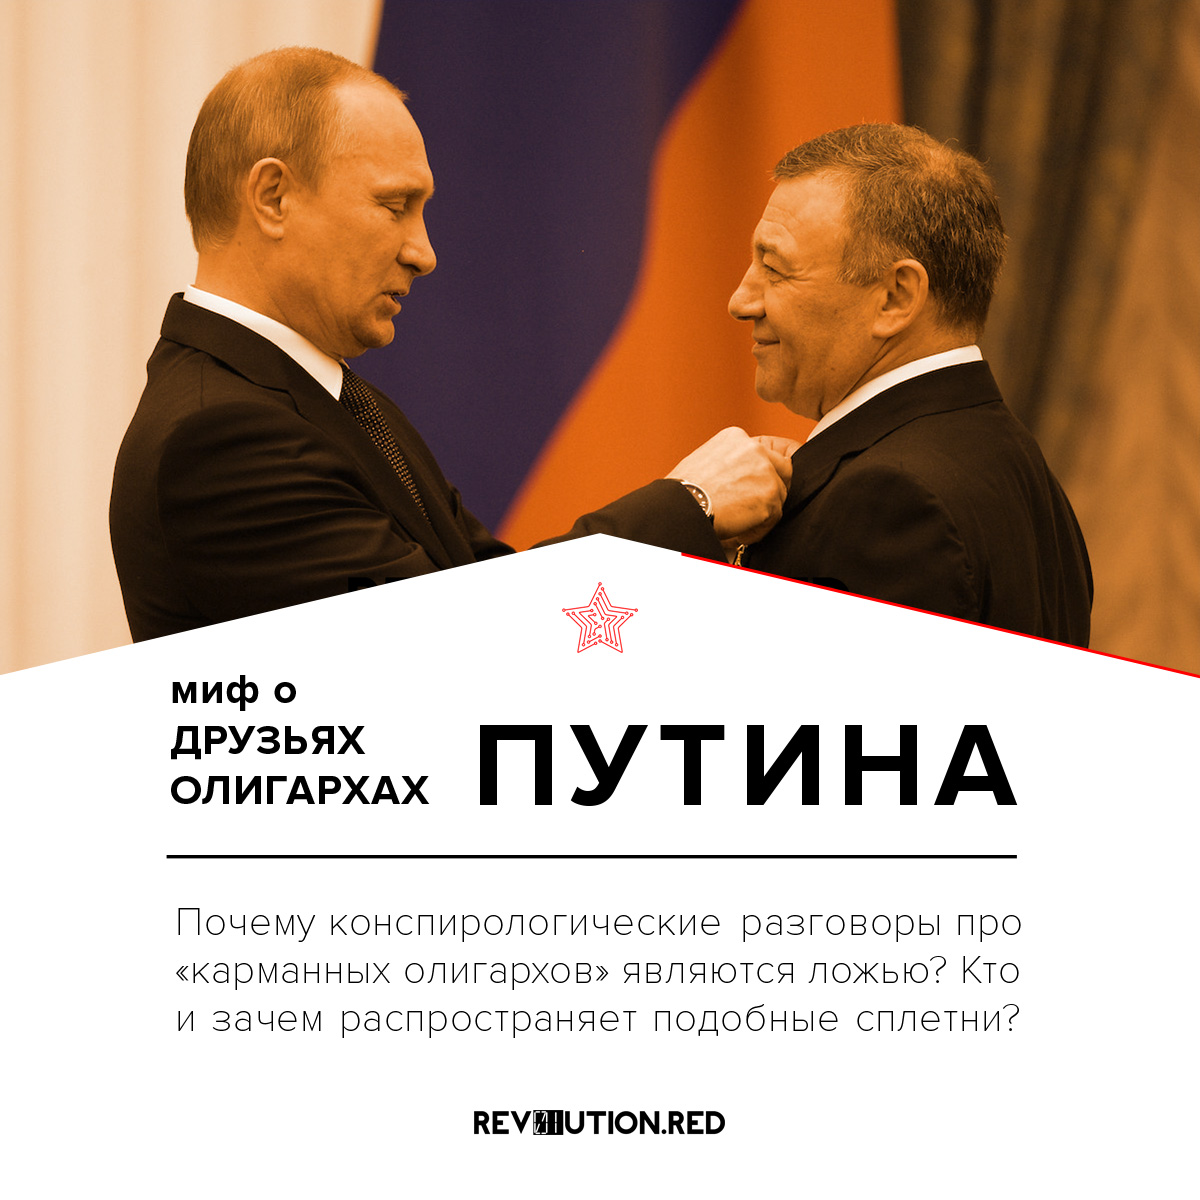 Миф о друзьях-олигархах Путина